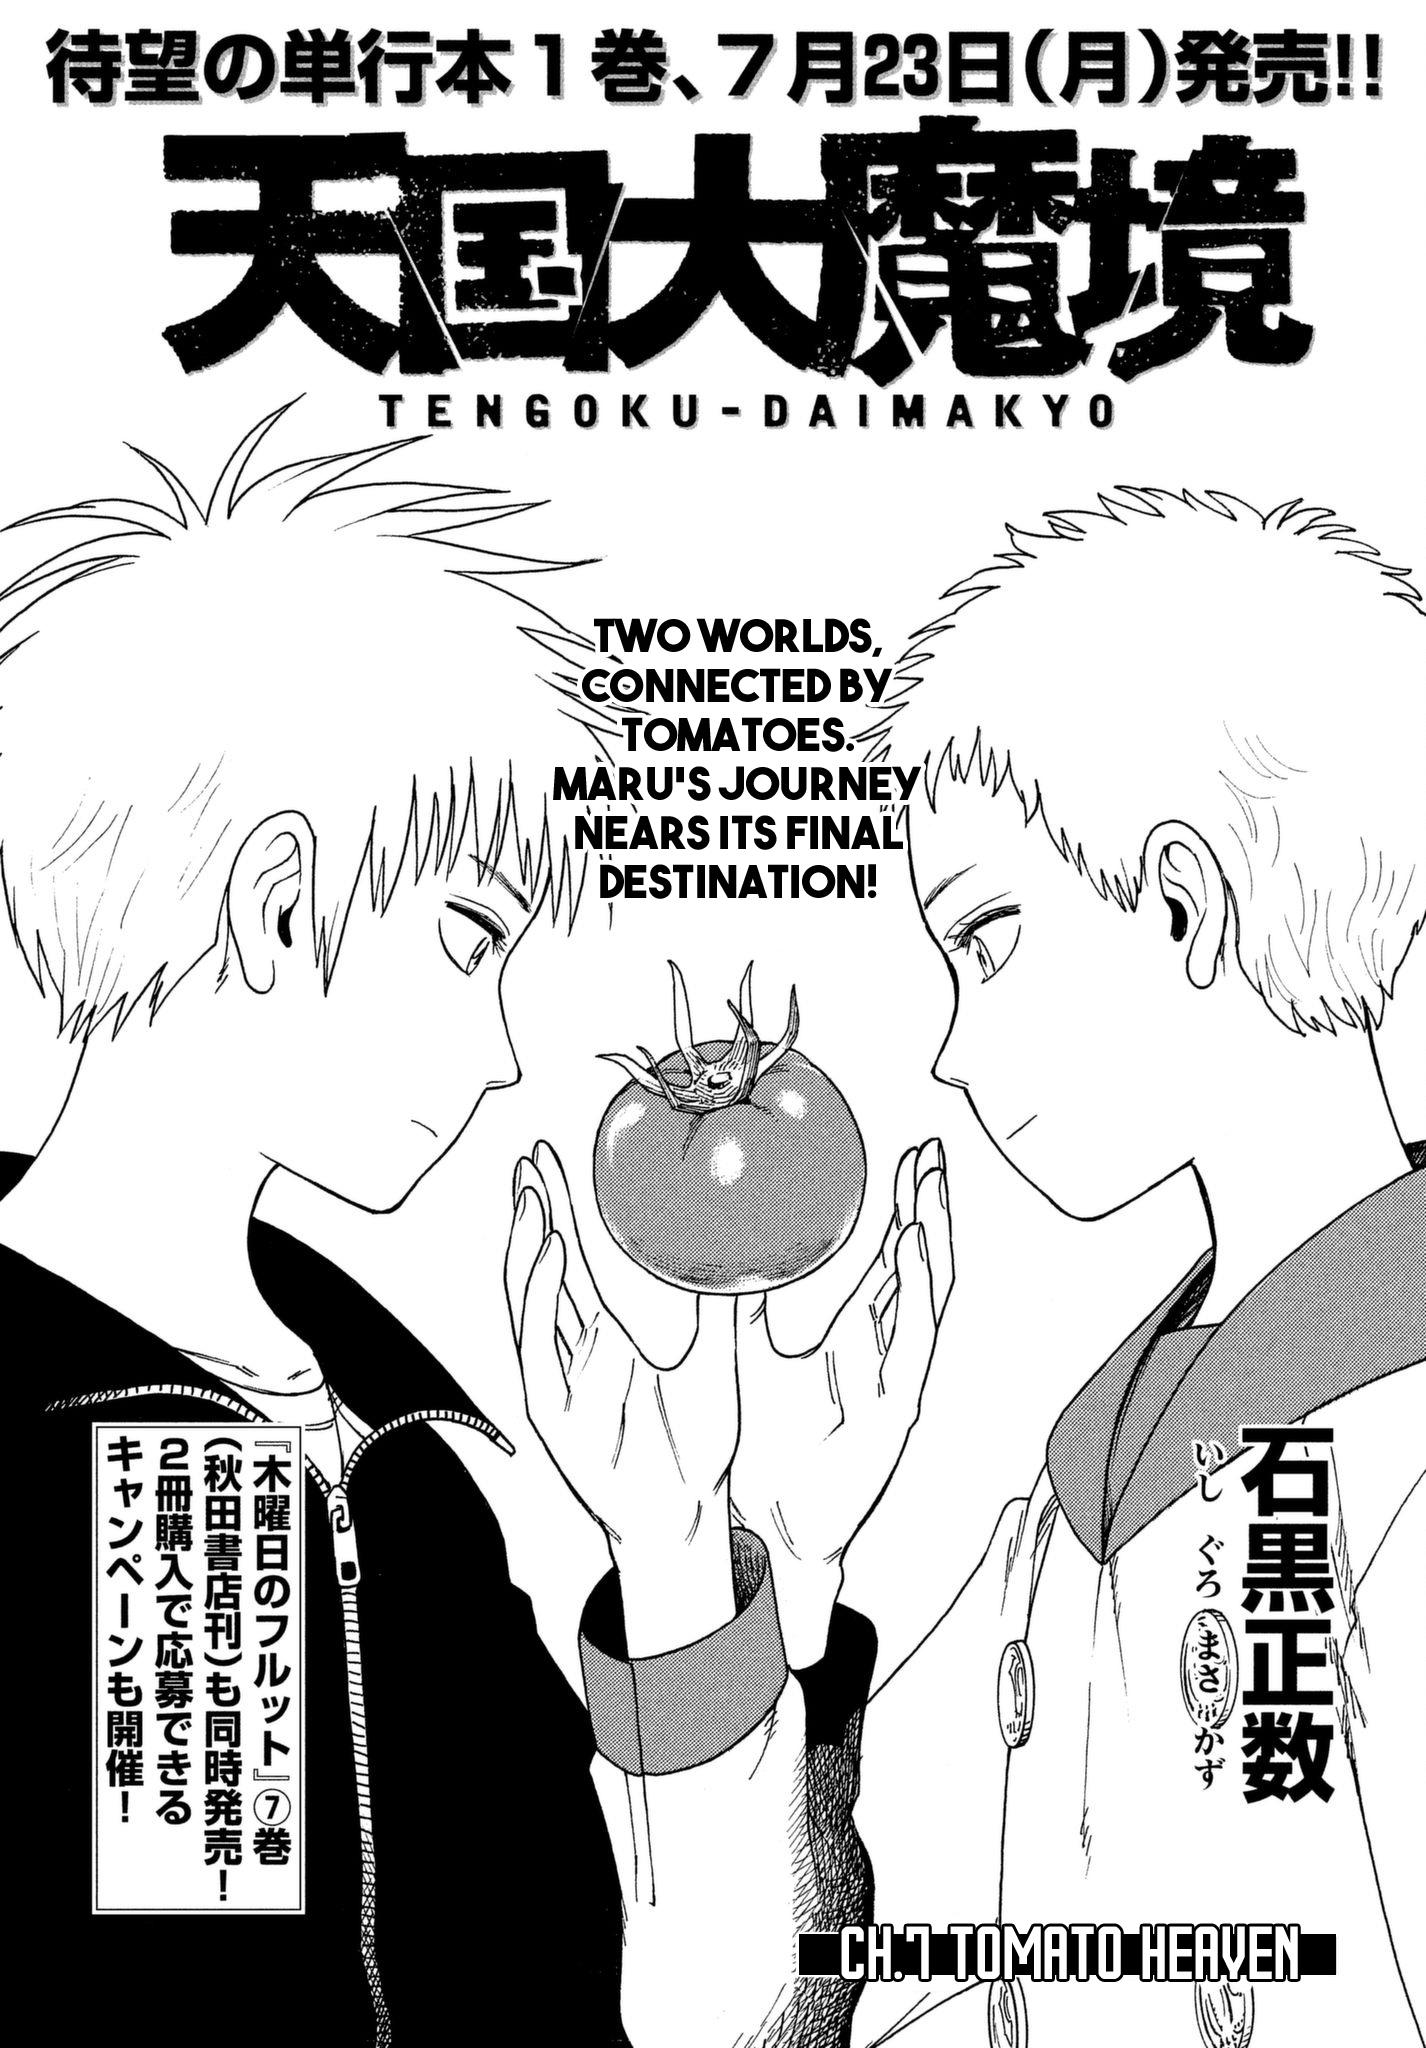 Read Tengoku Daimakyou Vol.1 Chapter 7: Tomato Heaven on Mangakakalot